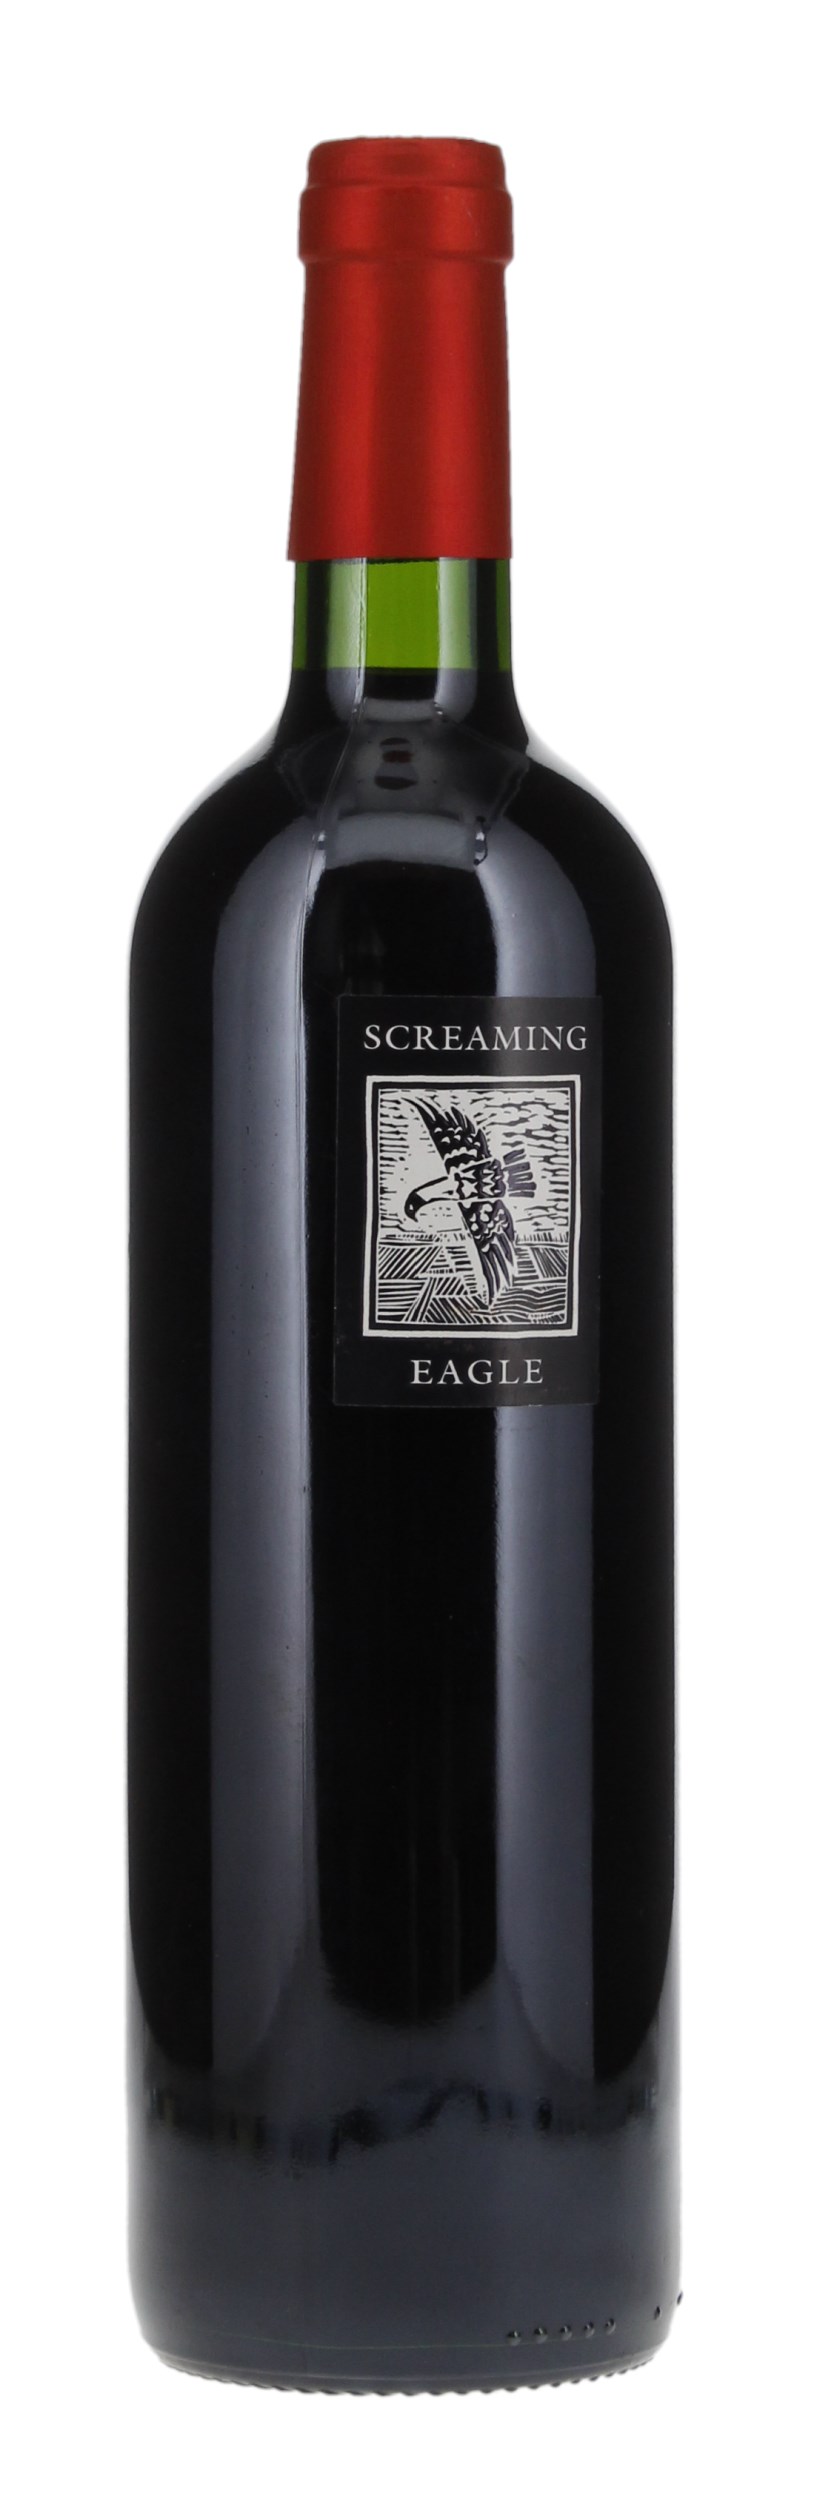 2008 Screaming Eagle Cabernet Sauvignon, 750ml